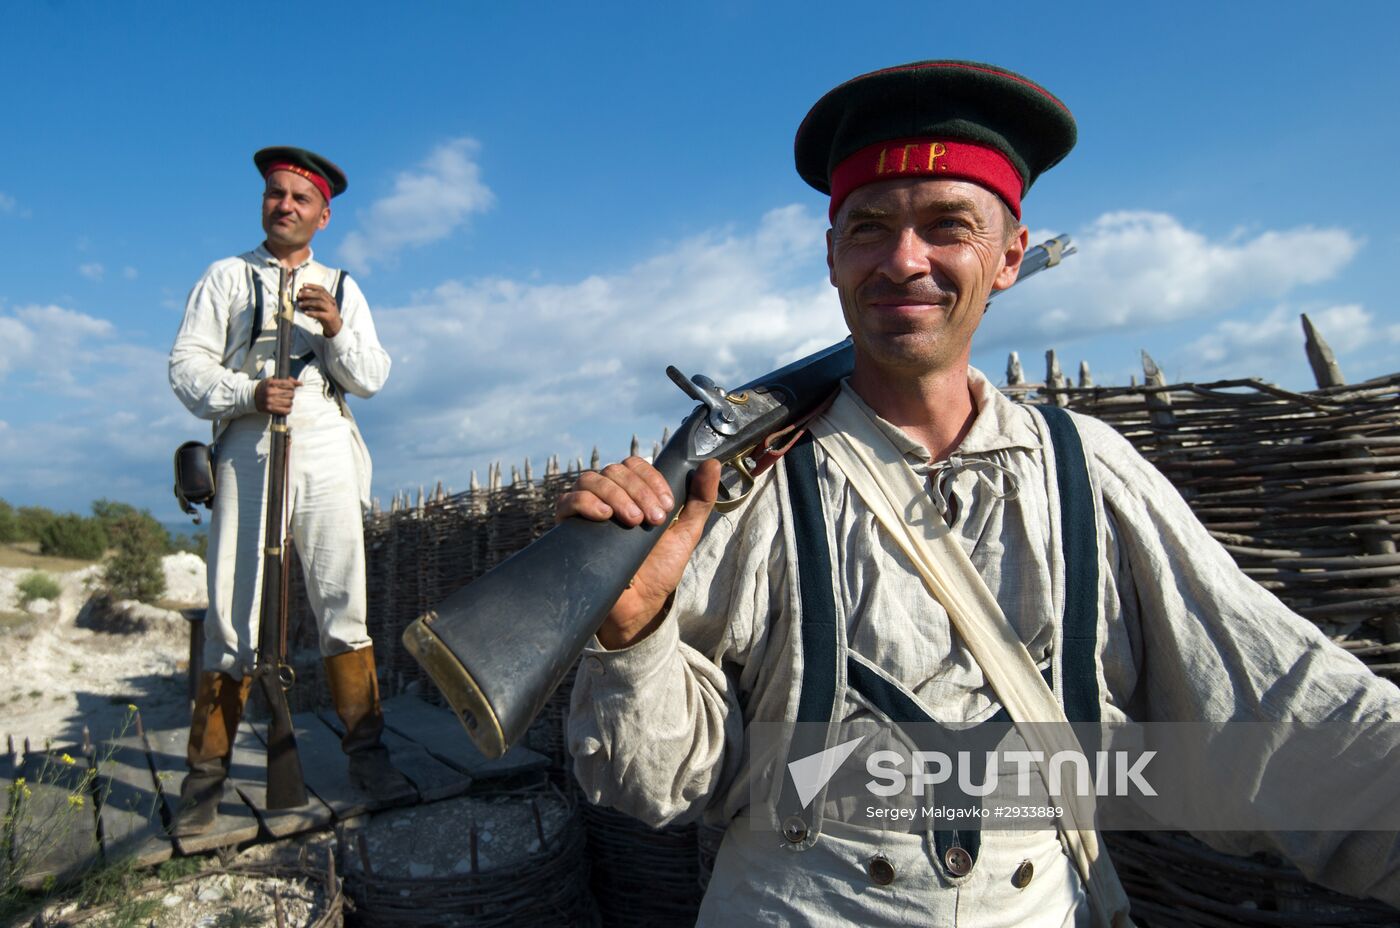 Crimean military historical festival